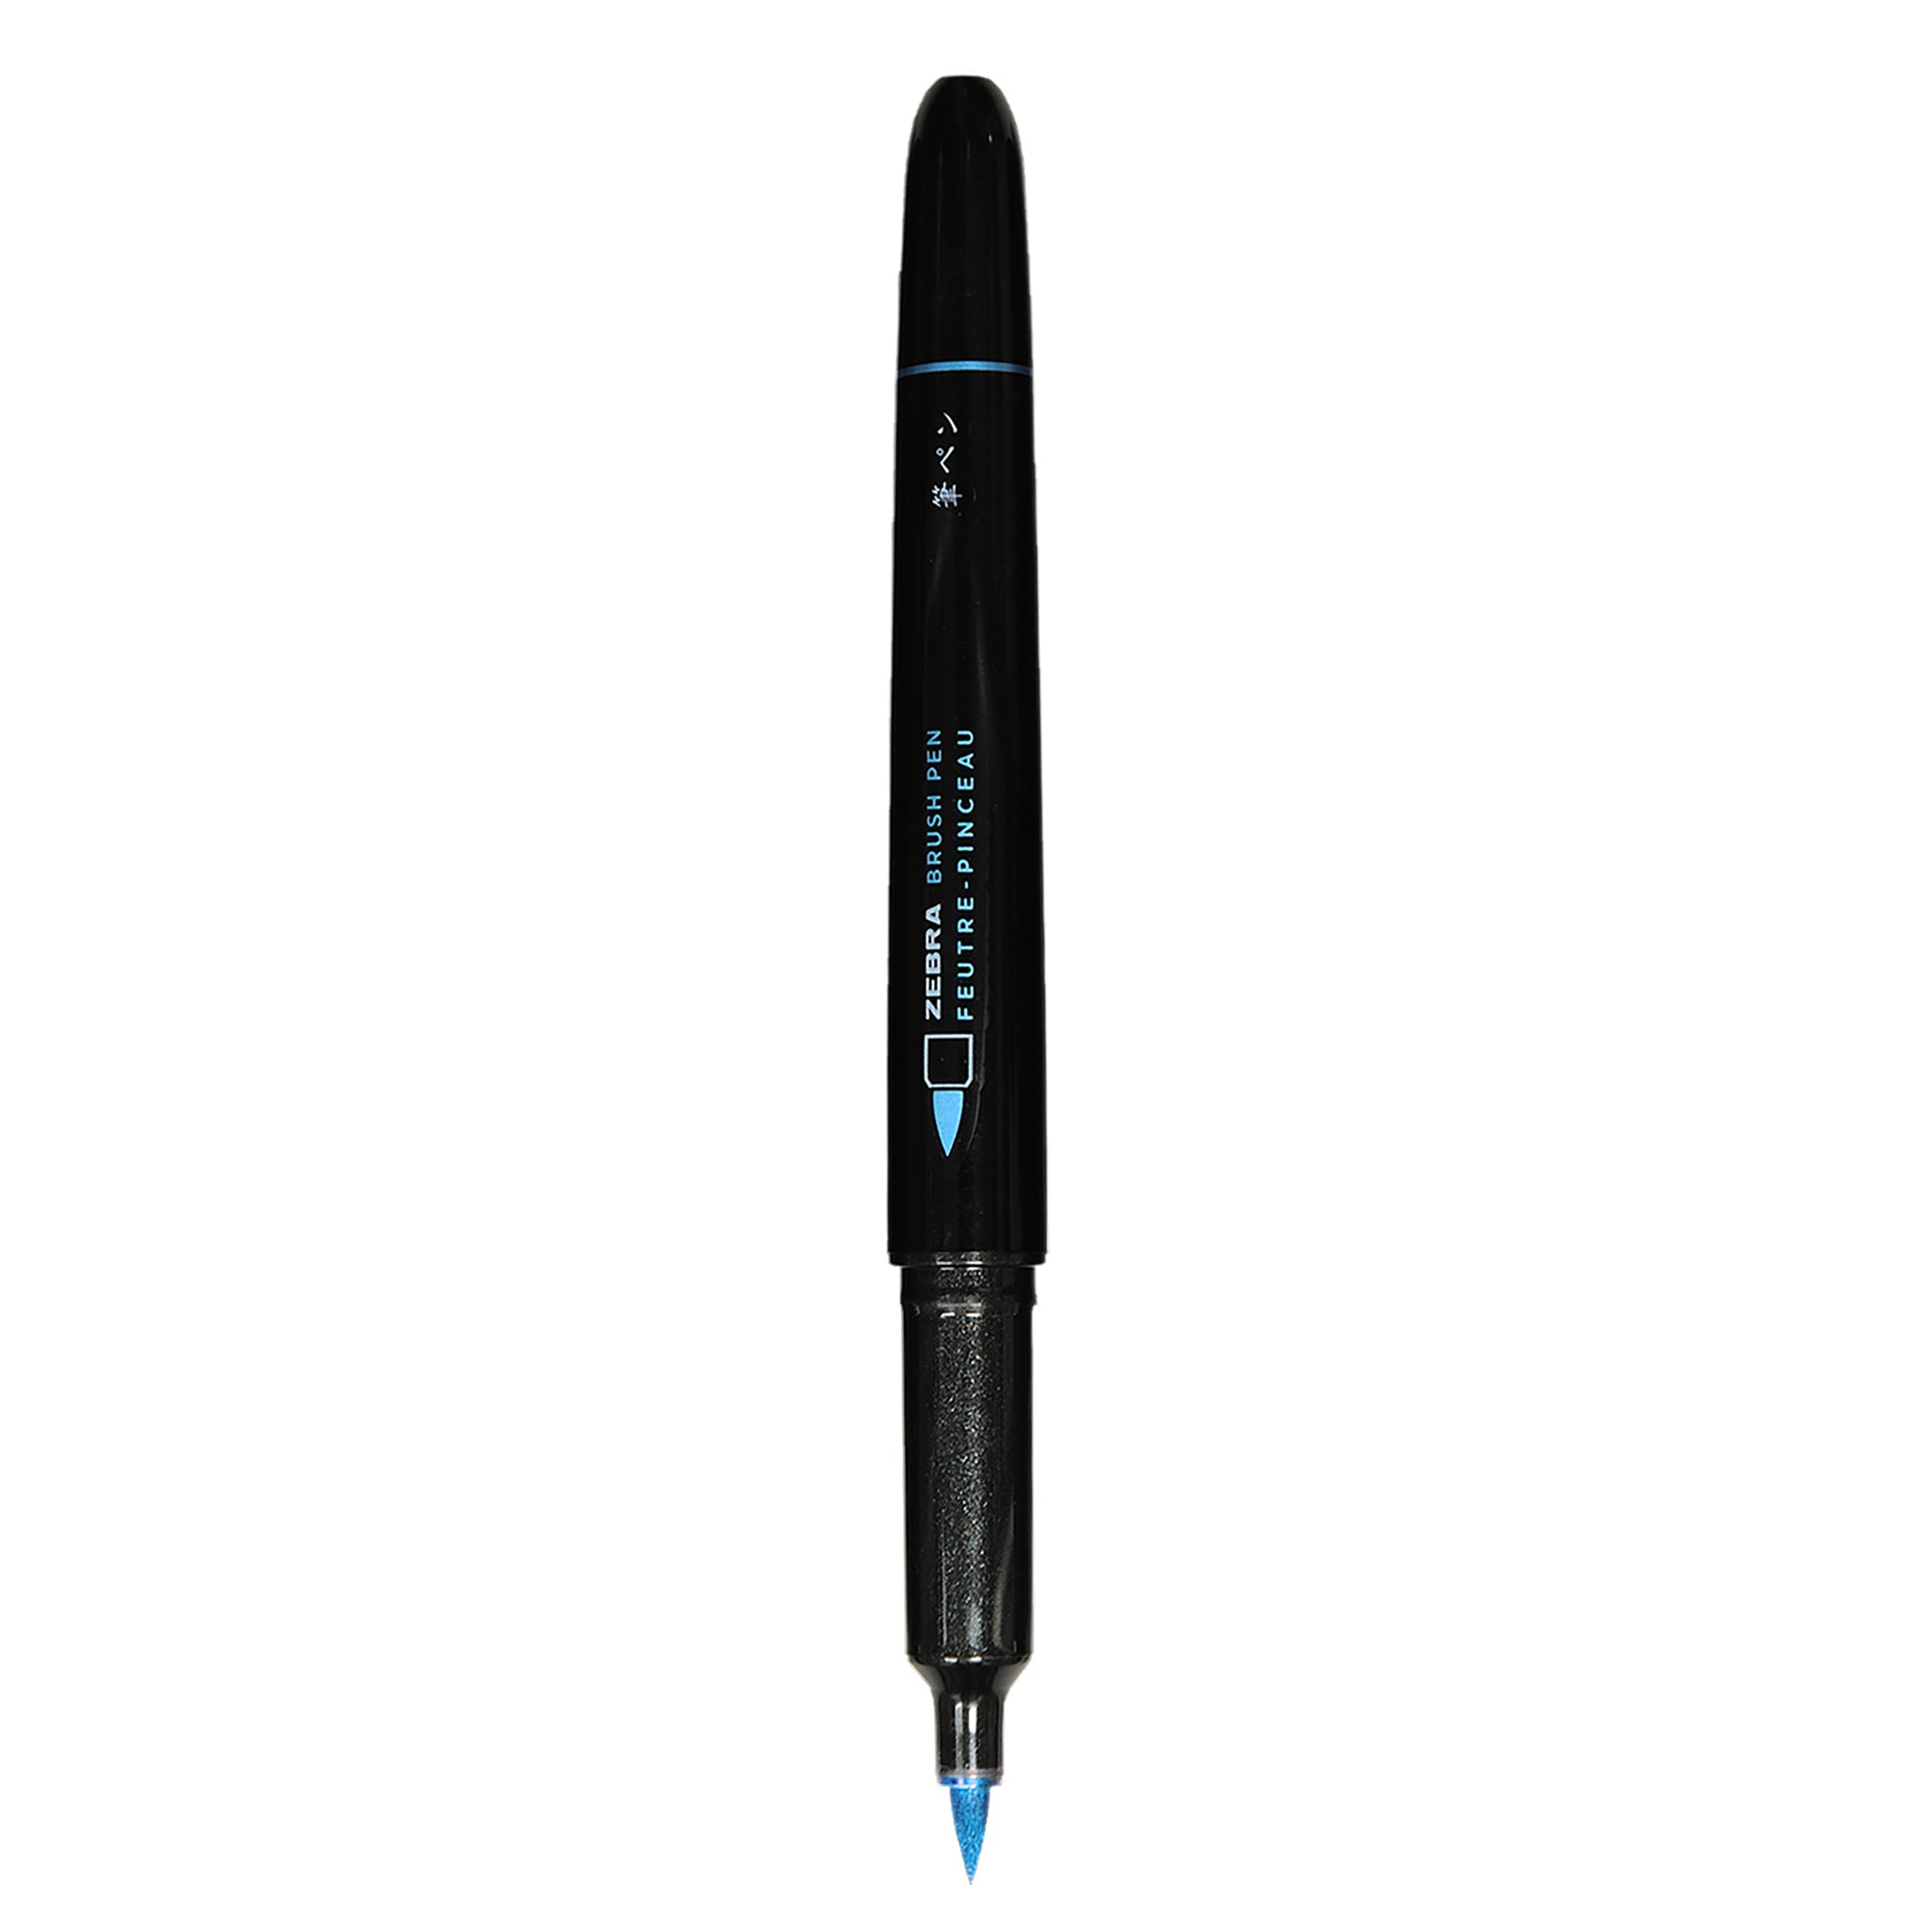 ZEBRA Brand Metallic Brush Pen